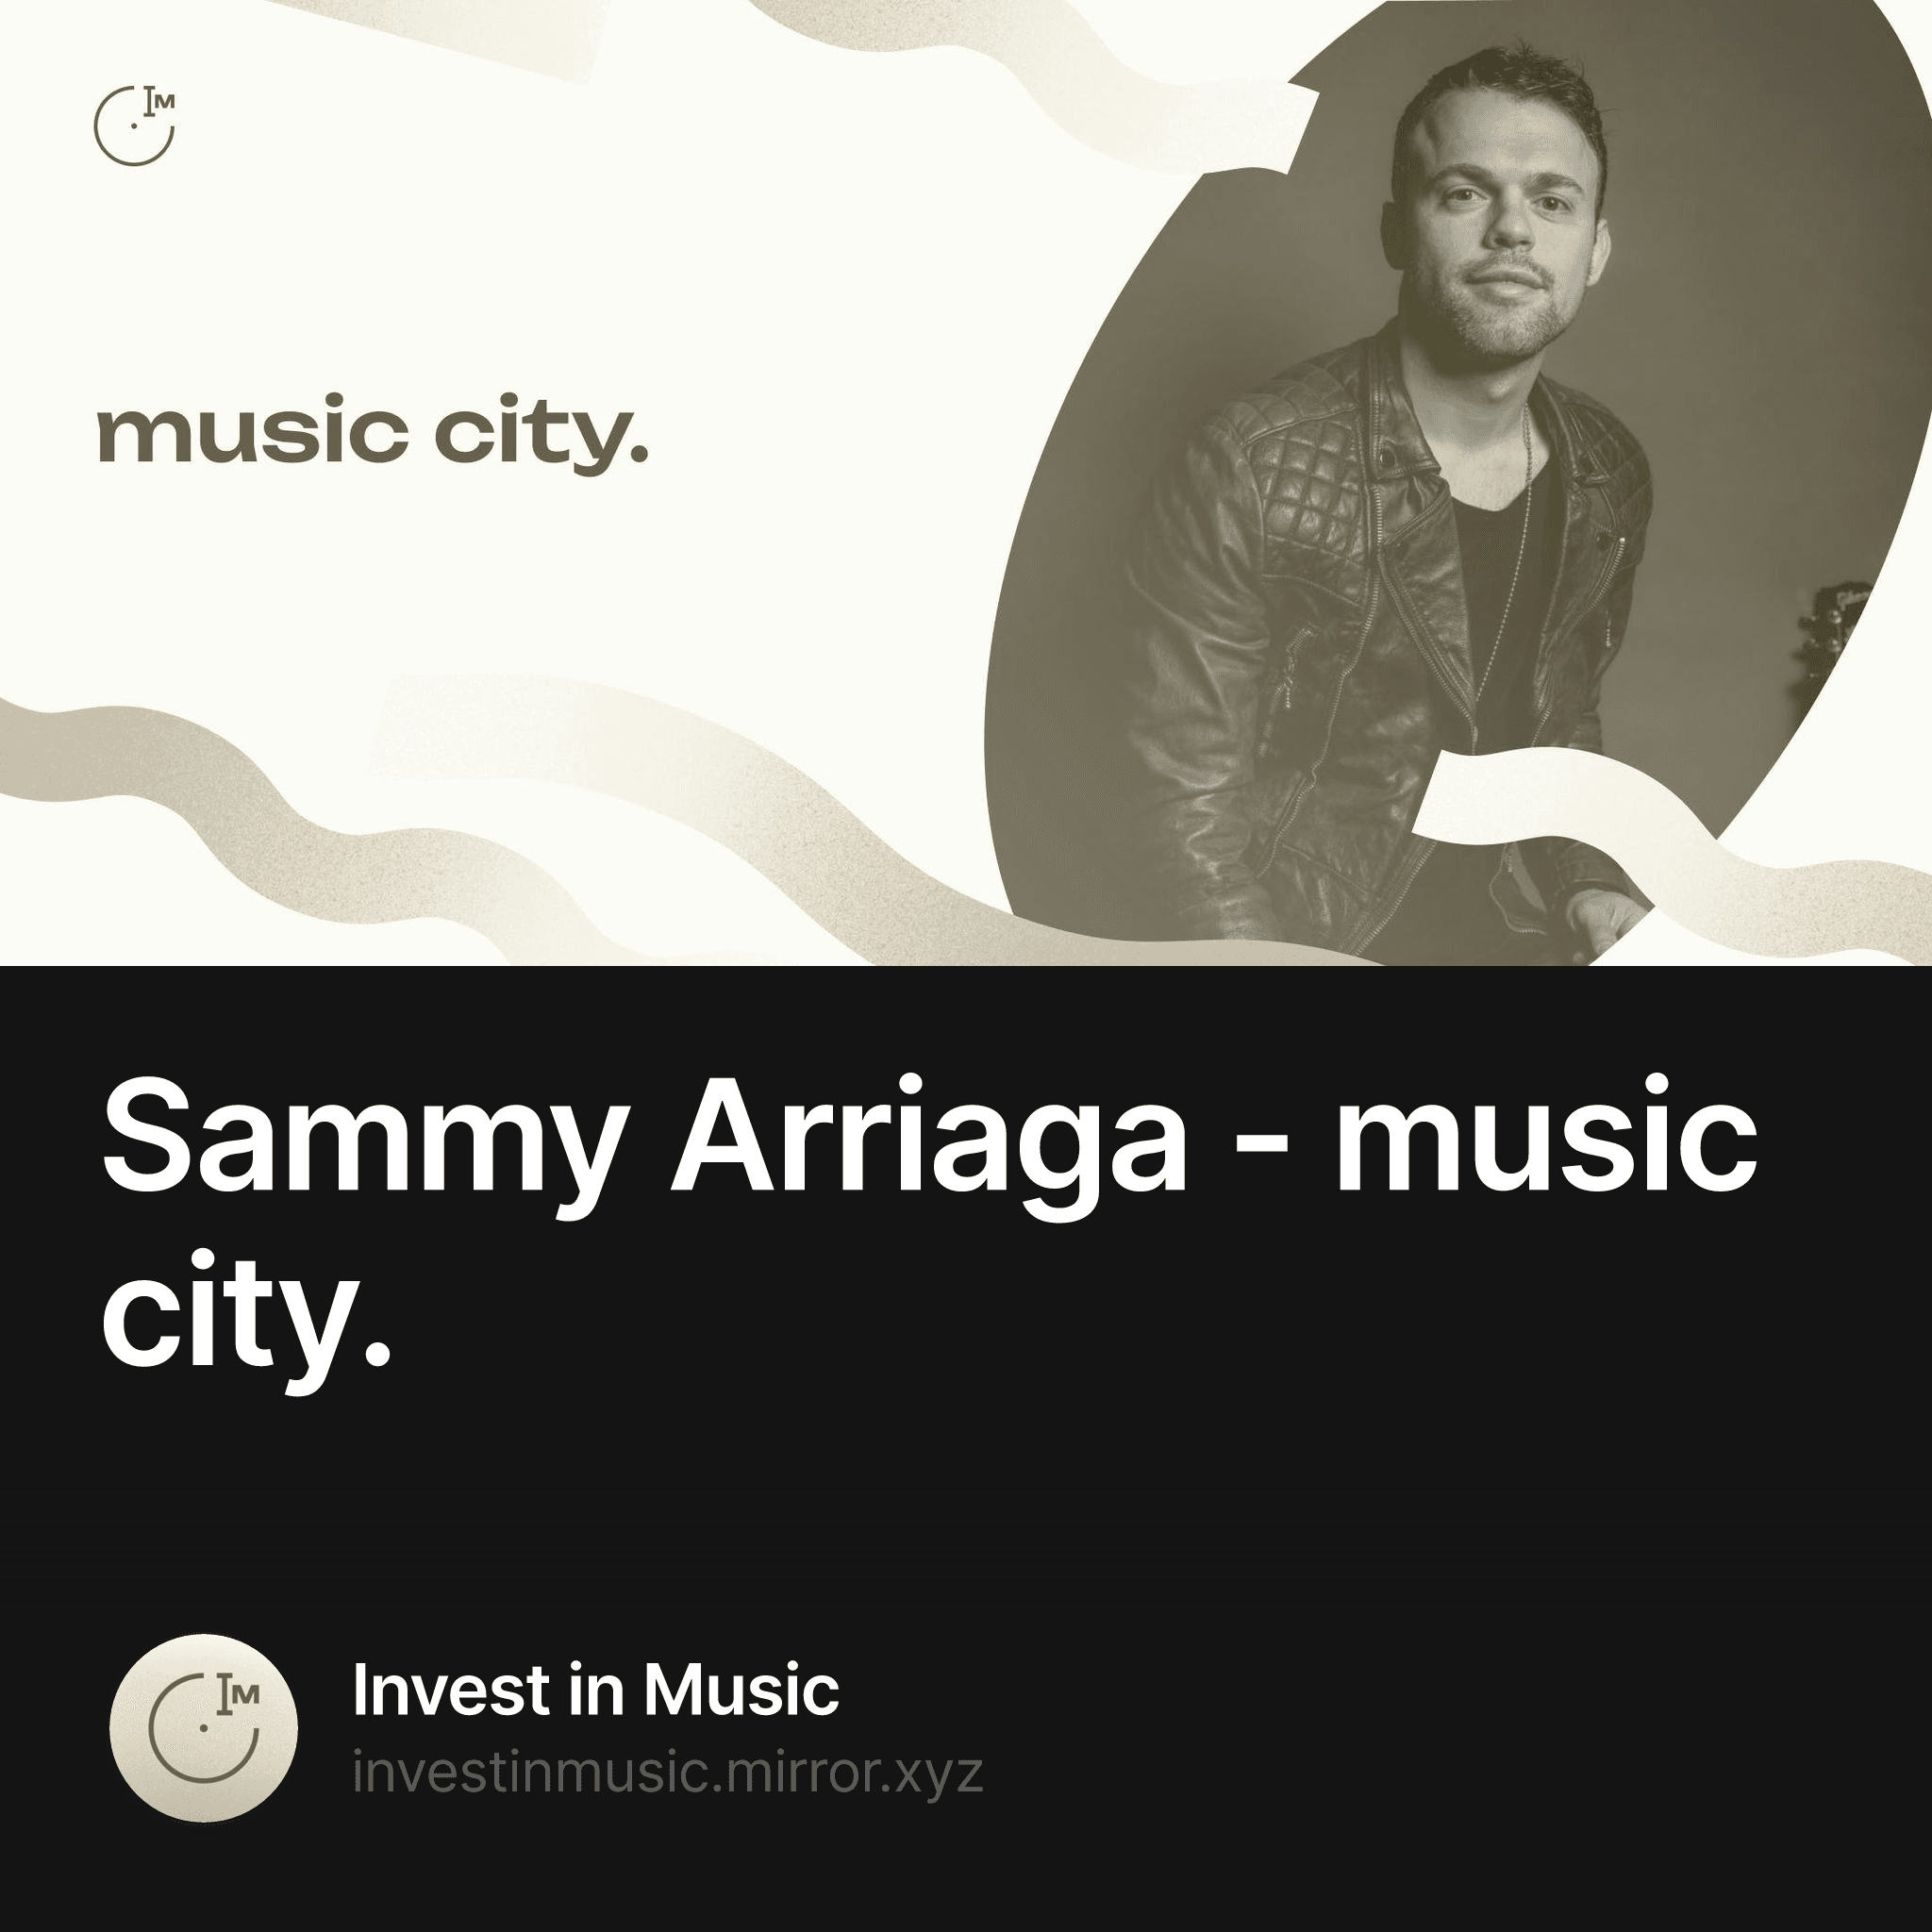 Sammy Arriaga - music city. 47/50